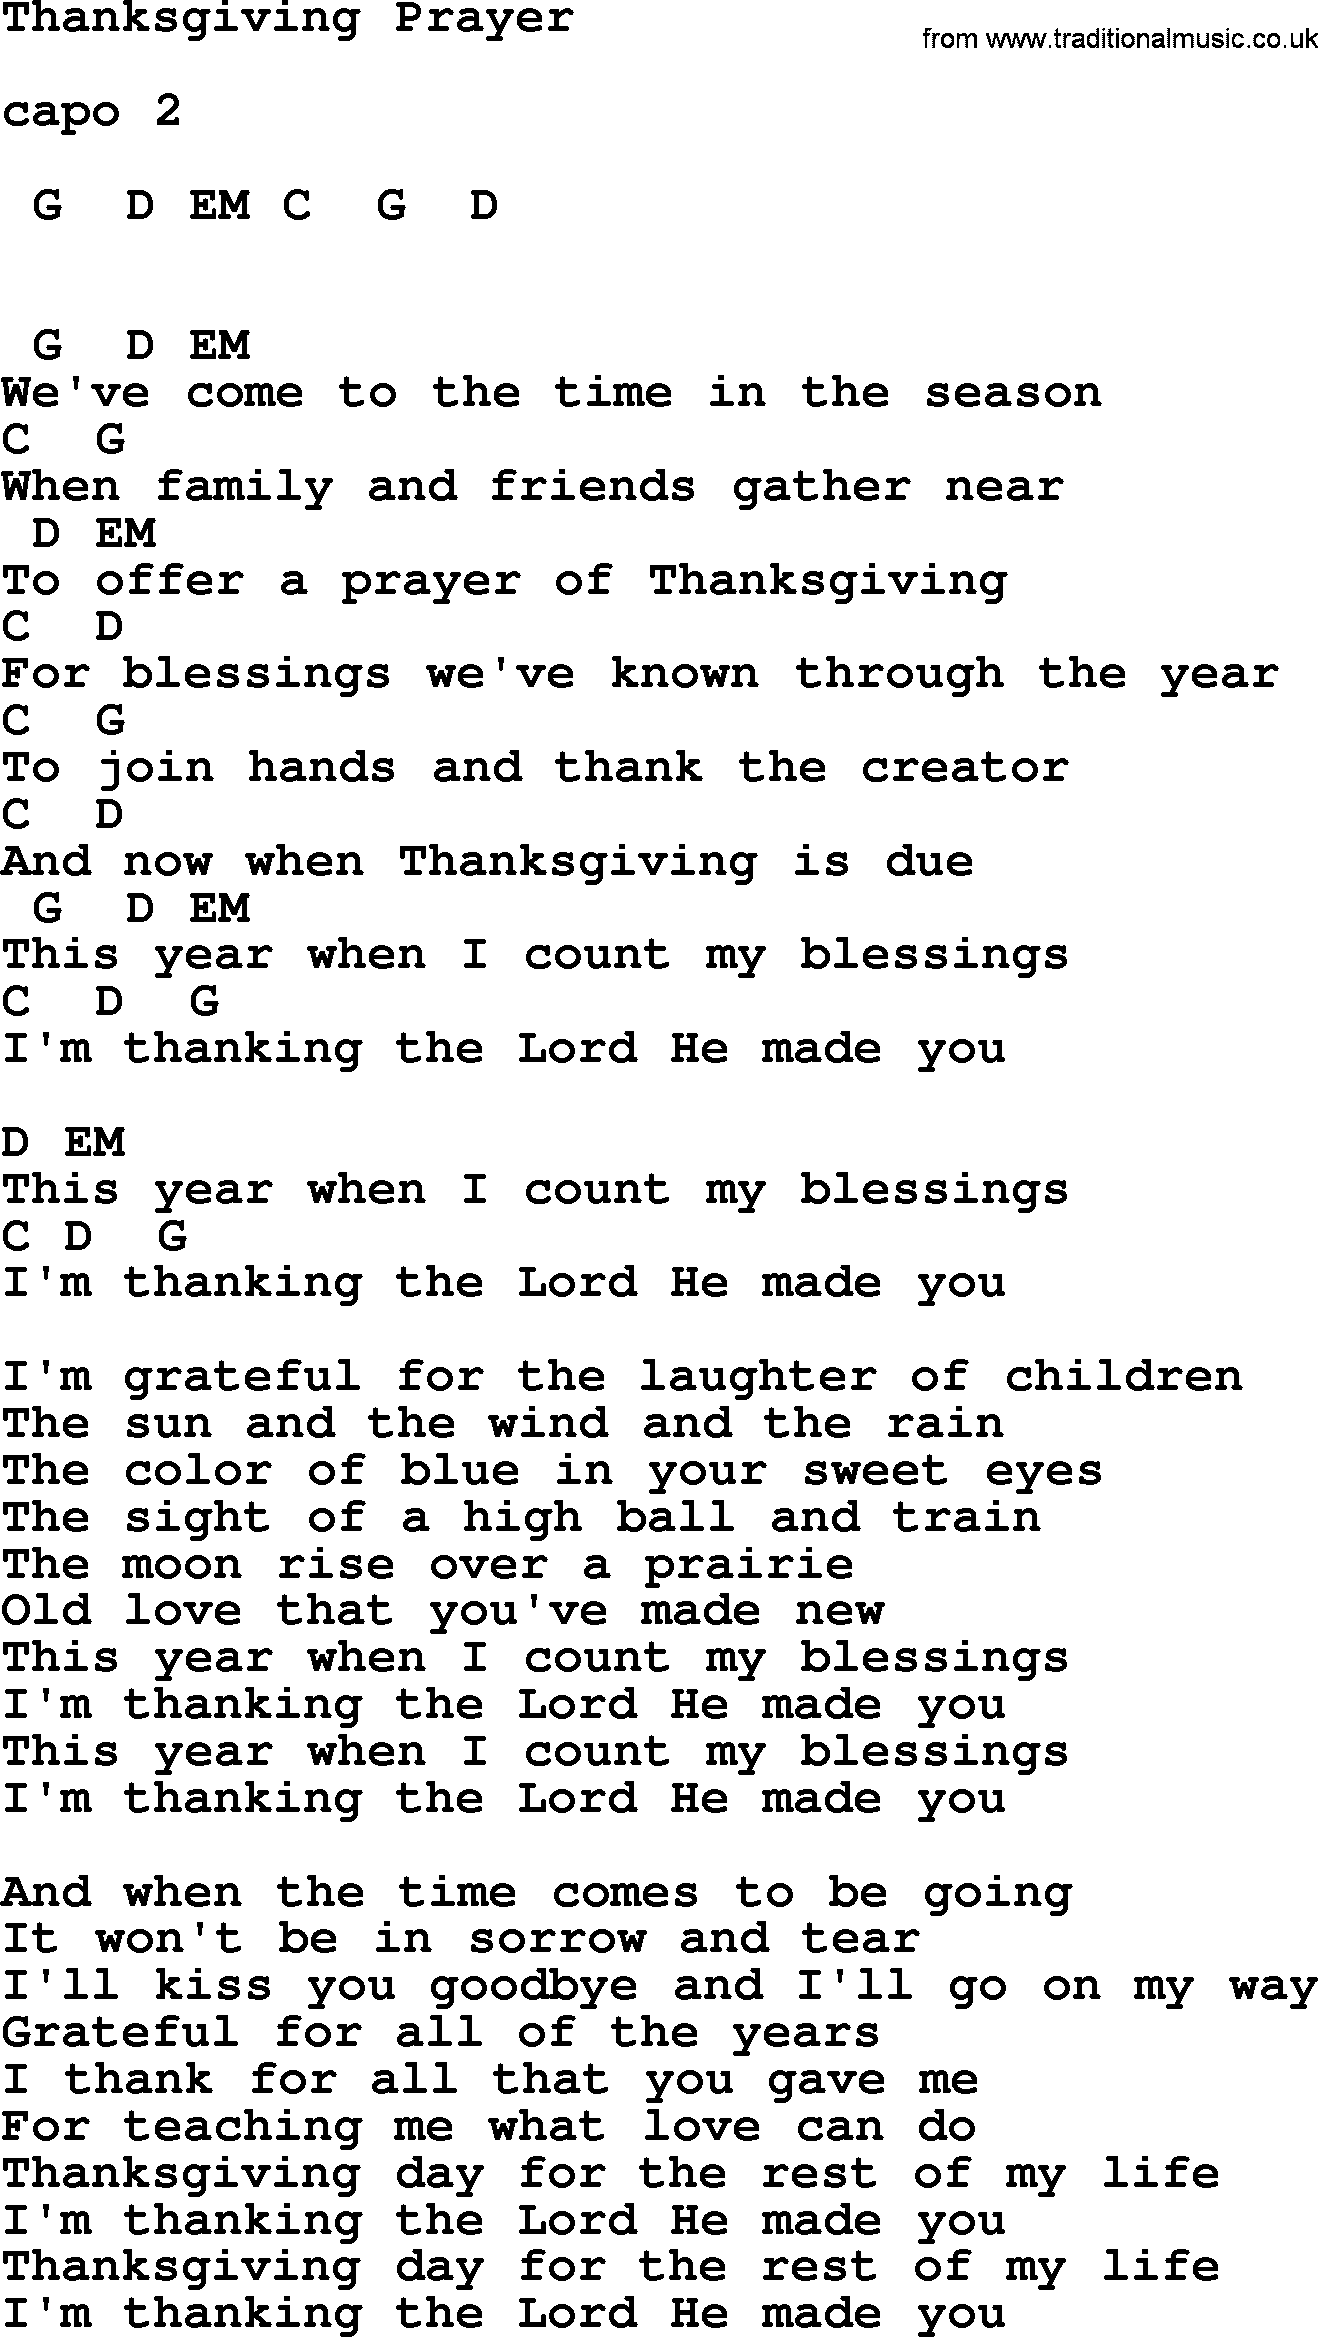 Johnny Cash song Thanksgiving Prayer, lyrics and chords